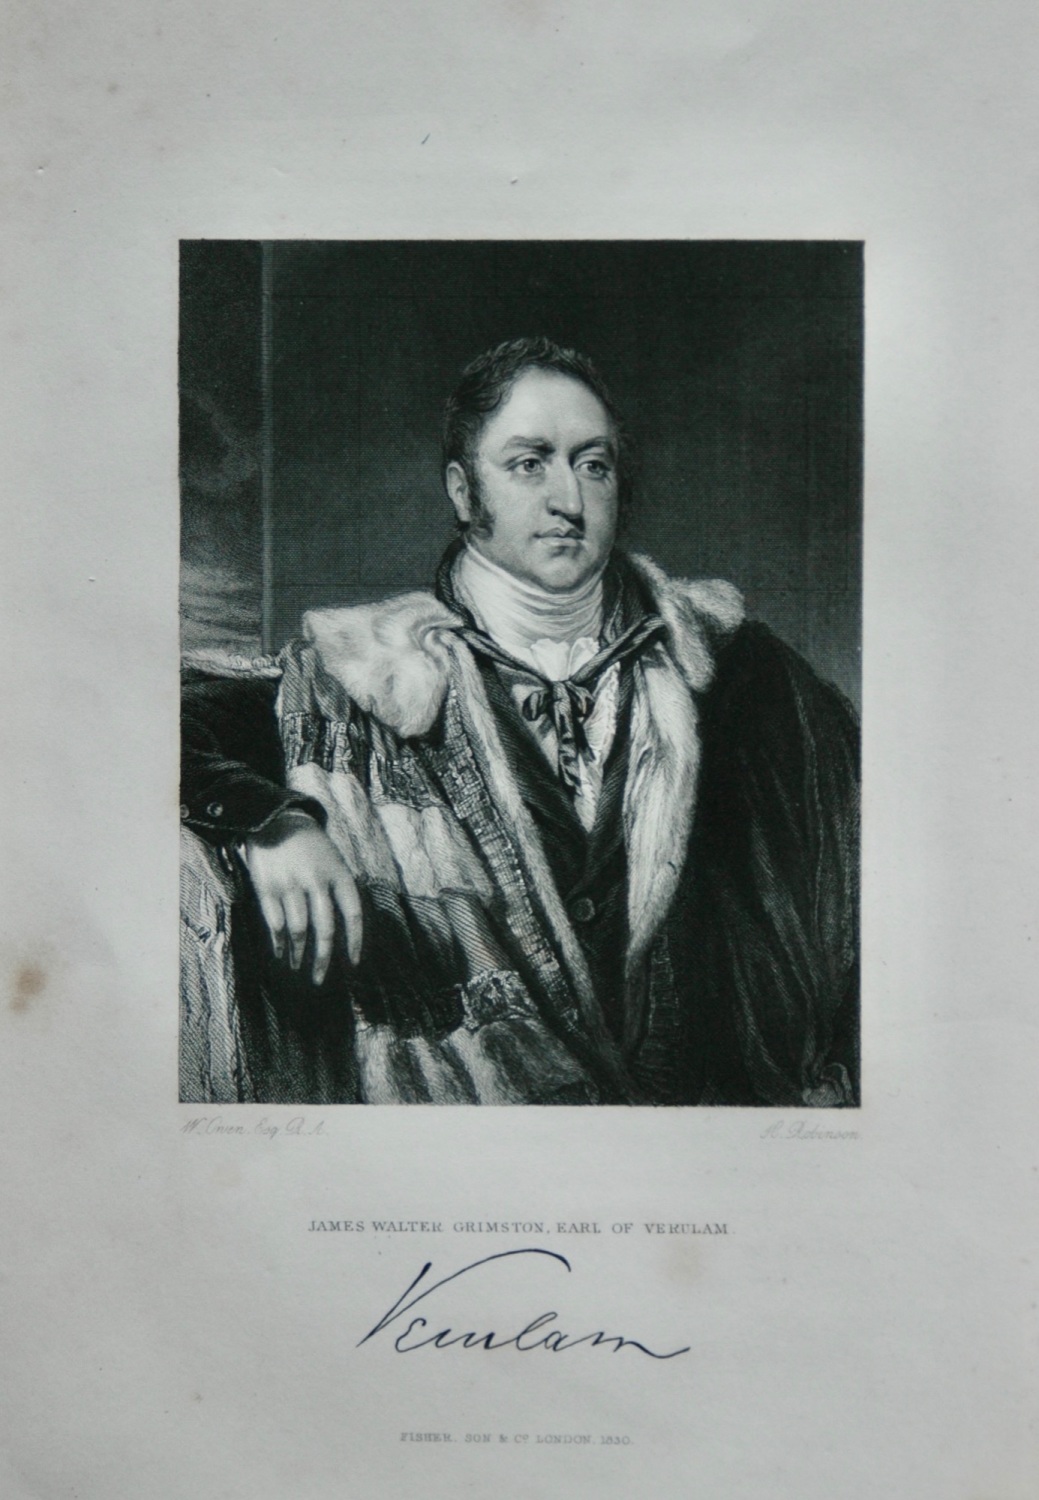 James Walter Grinston, Earl of Verulam.  1831.